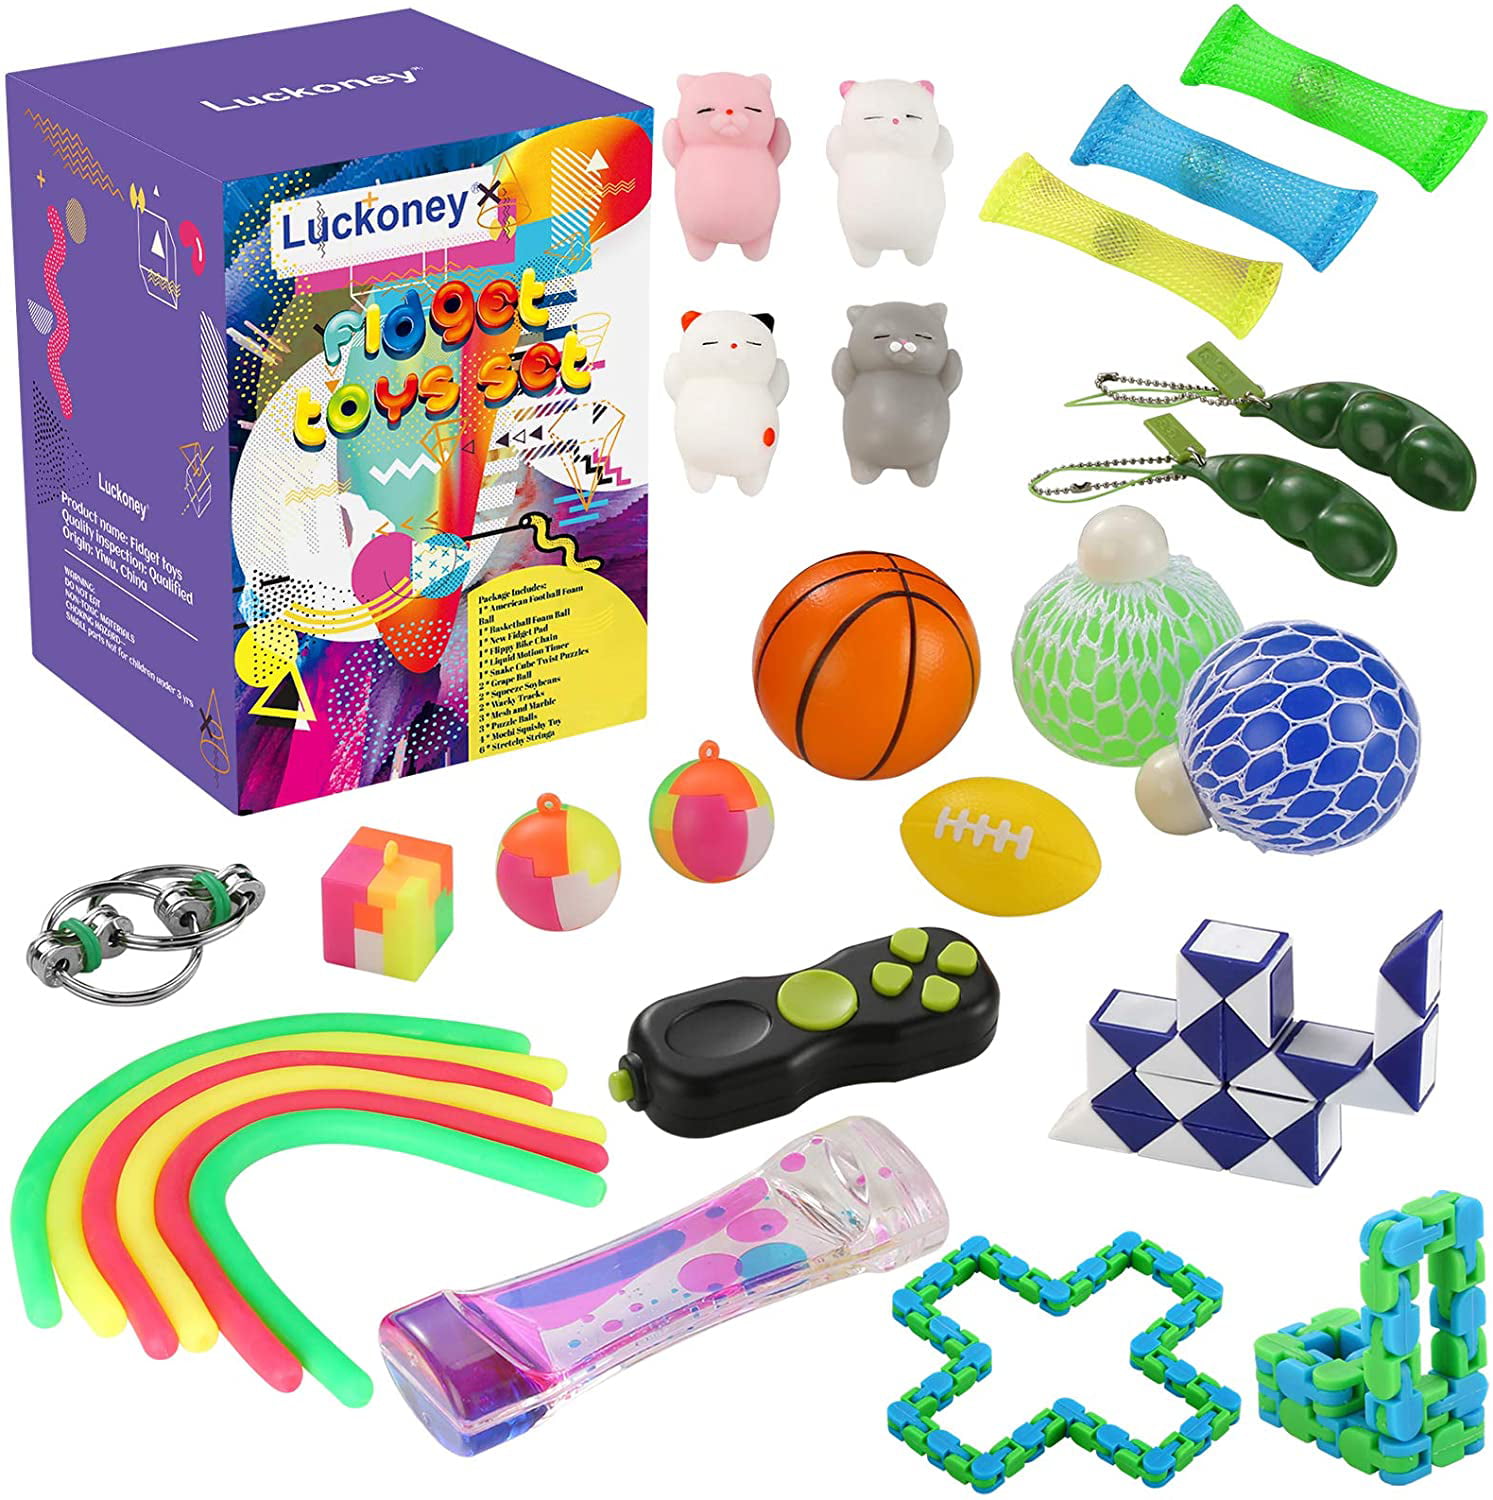 PenVinoo 30 Pack Sensory Fidget Toys Set ADHD Adults Anxiety Stress Relief Kit,Soothing Marble Fidgets,Squeeze Bean,Fidget Toy Chain,Magic Cube & More Fidget Sensory Toys Bundle for Kids Autism 